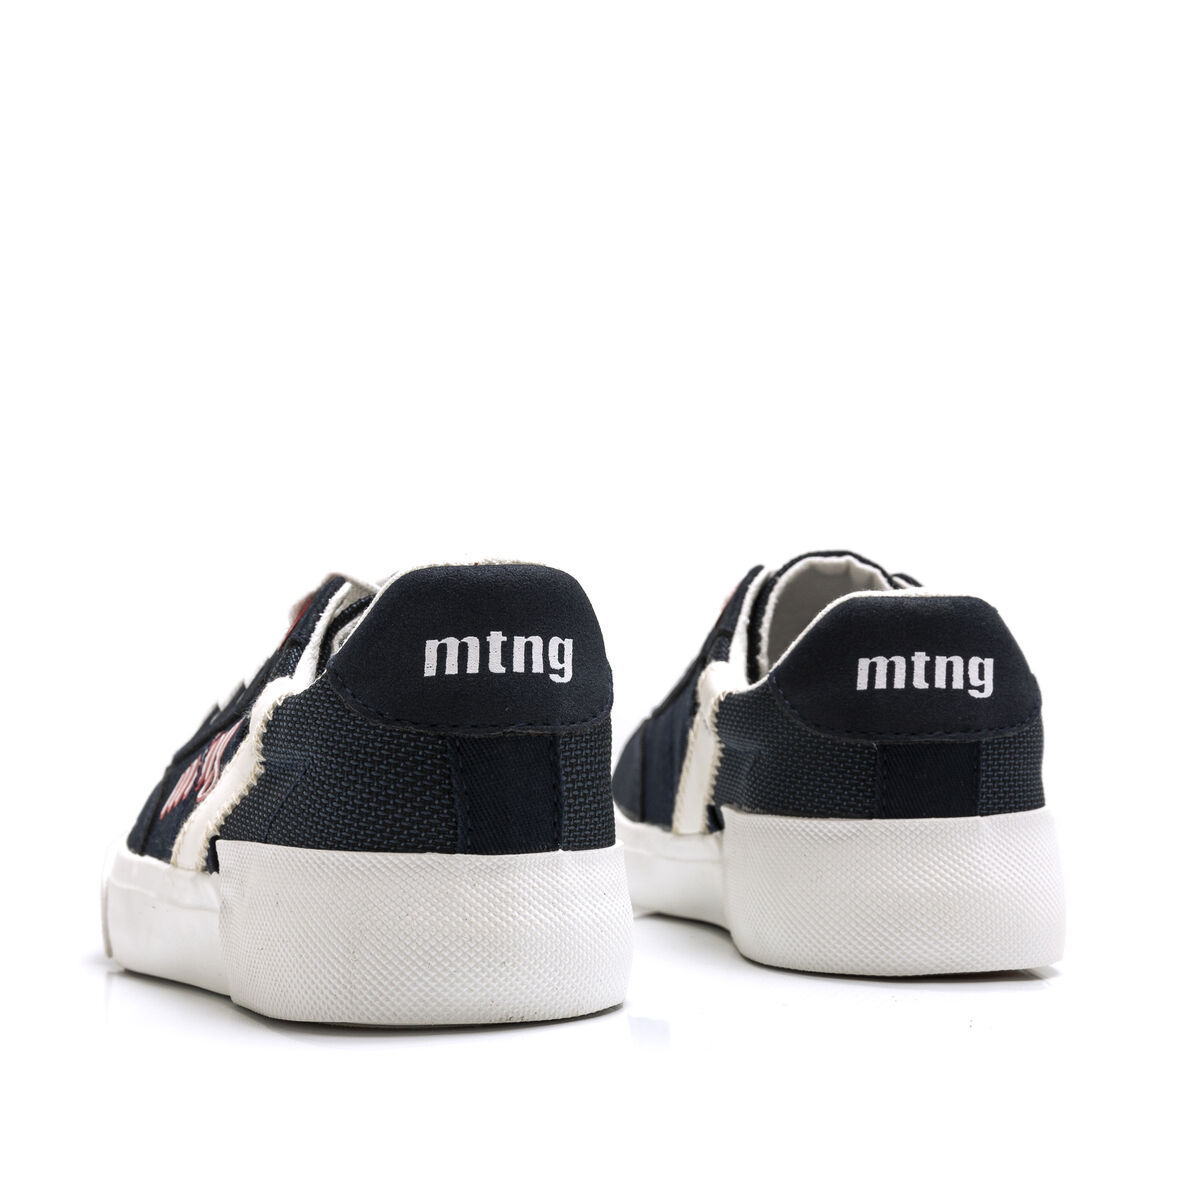 Zapatillas de Nino modelo EMI de MTNG image number 3